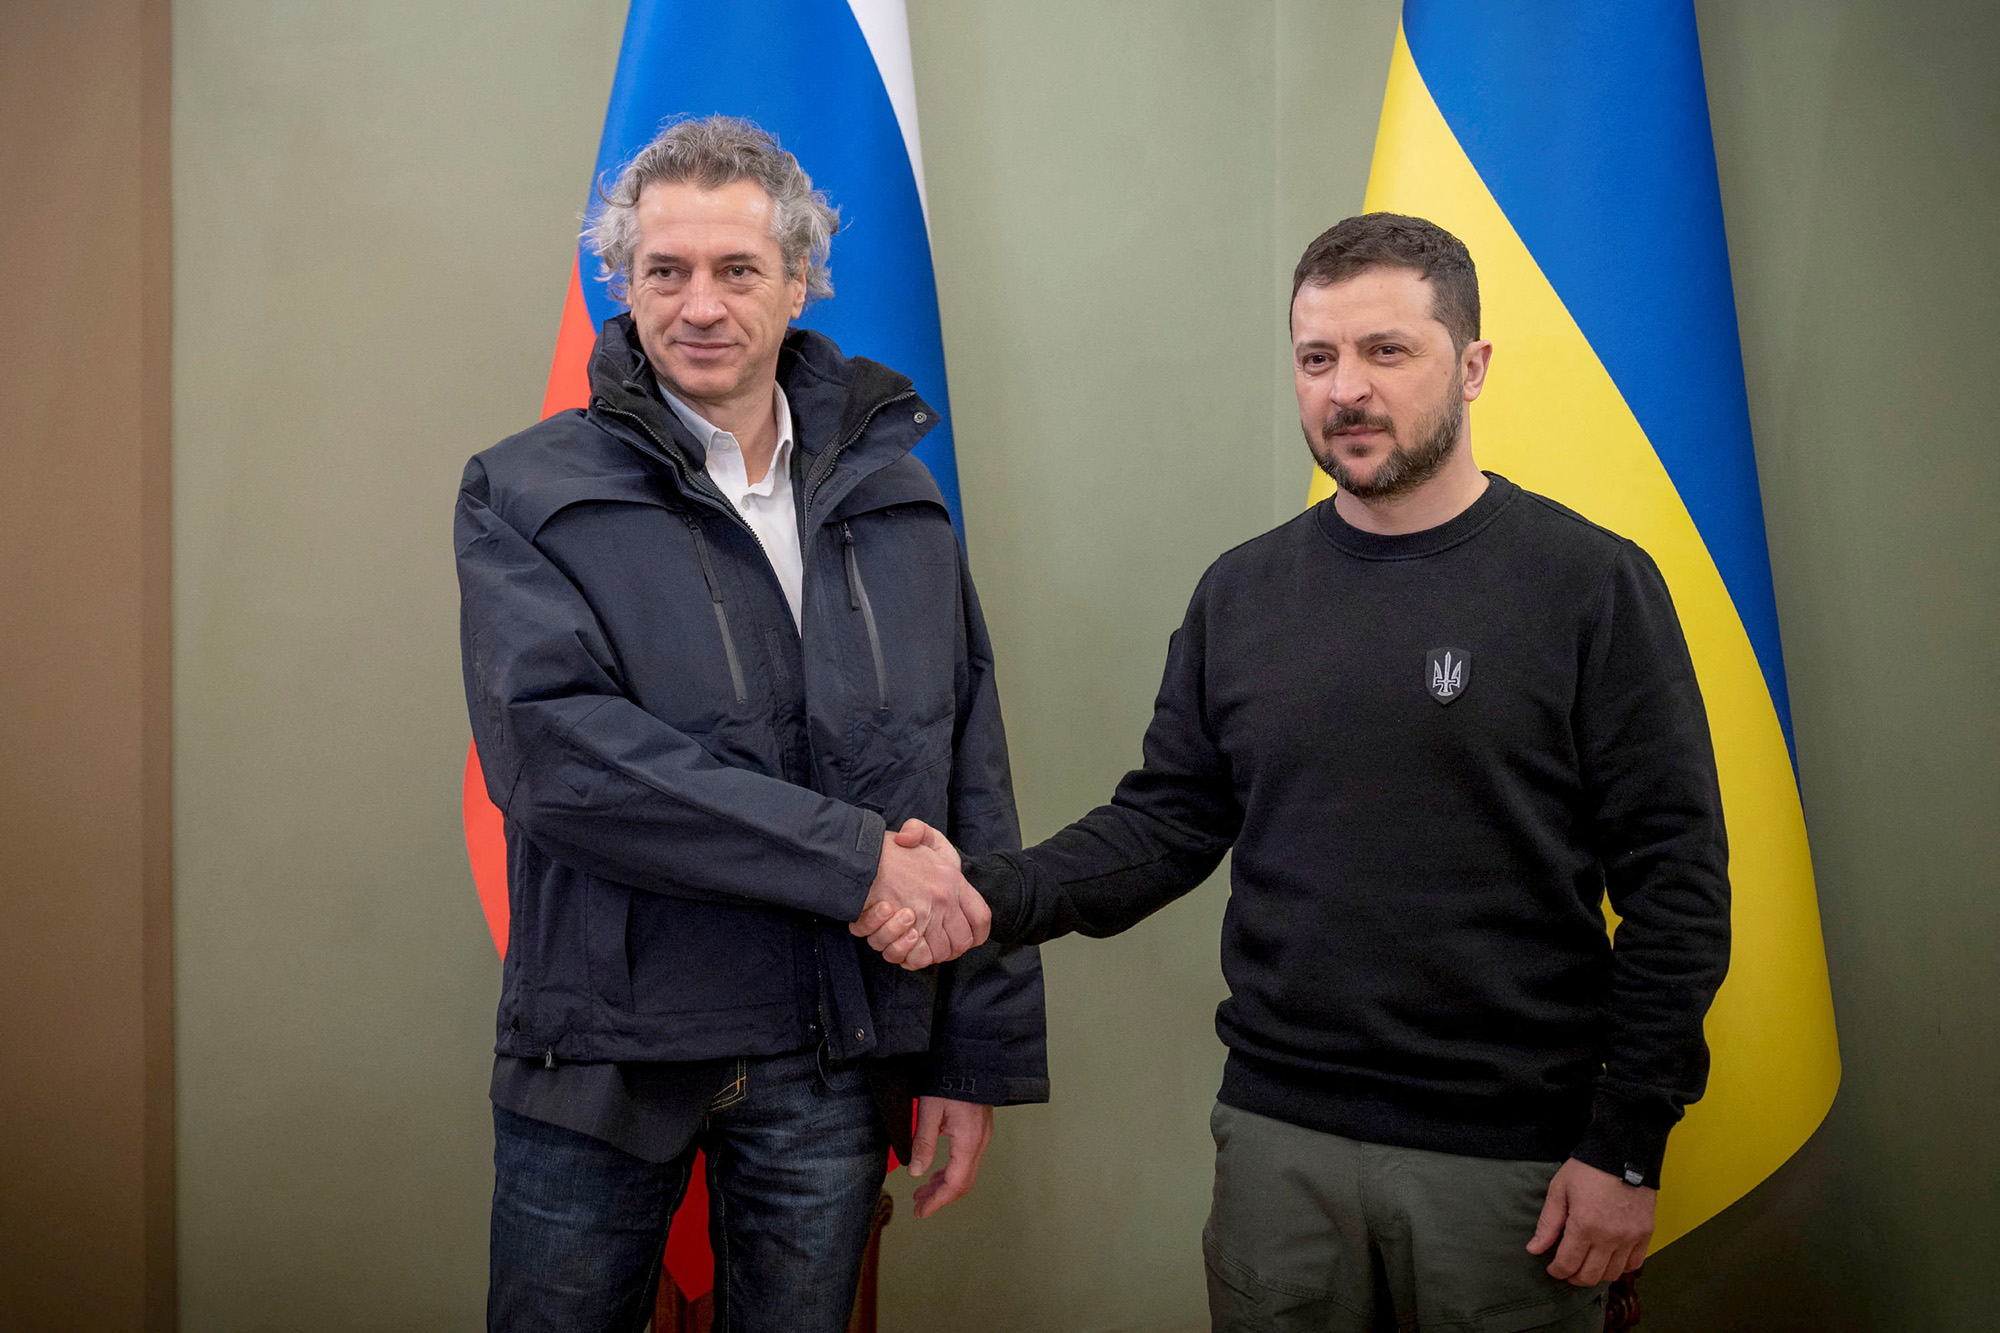 Slovenia's Prime Minister Robert Golob, right, and Ukraine's President Volodymyr Zelenskiy shake hands during their meeting in Kyiv, Ukraine, on March 31.